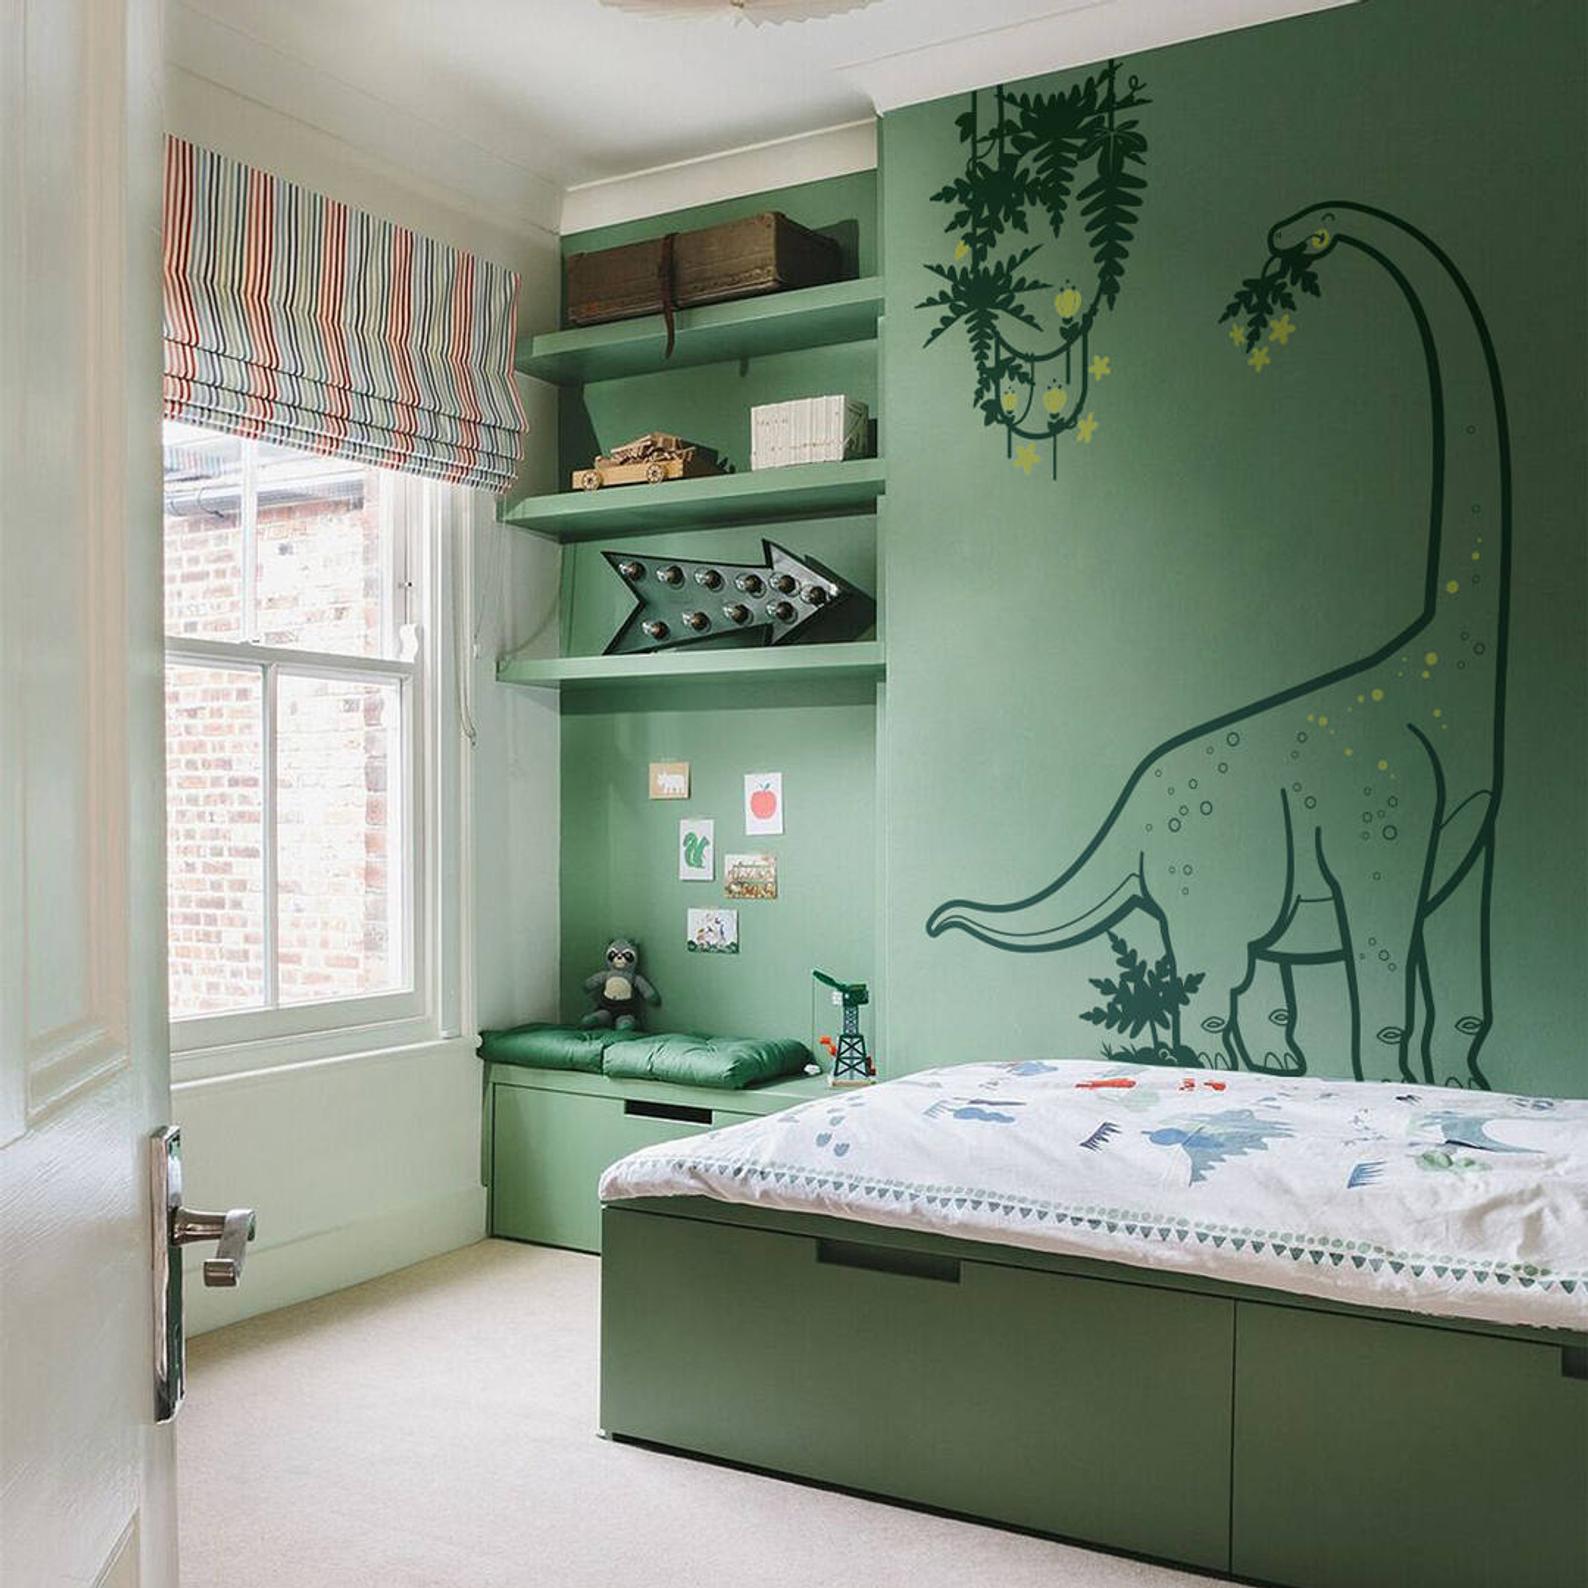 Home Decor DIY Wall Glow in The Dark Stickers Kids Bedroom Nursery Room Décor 